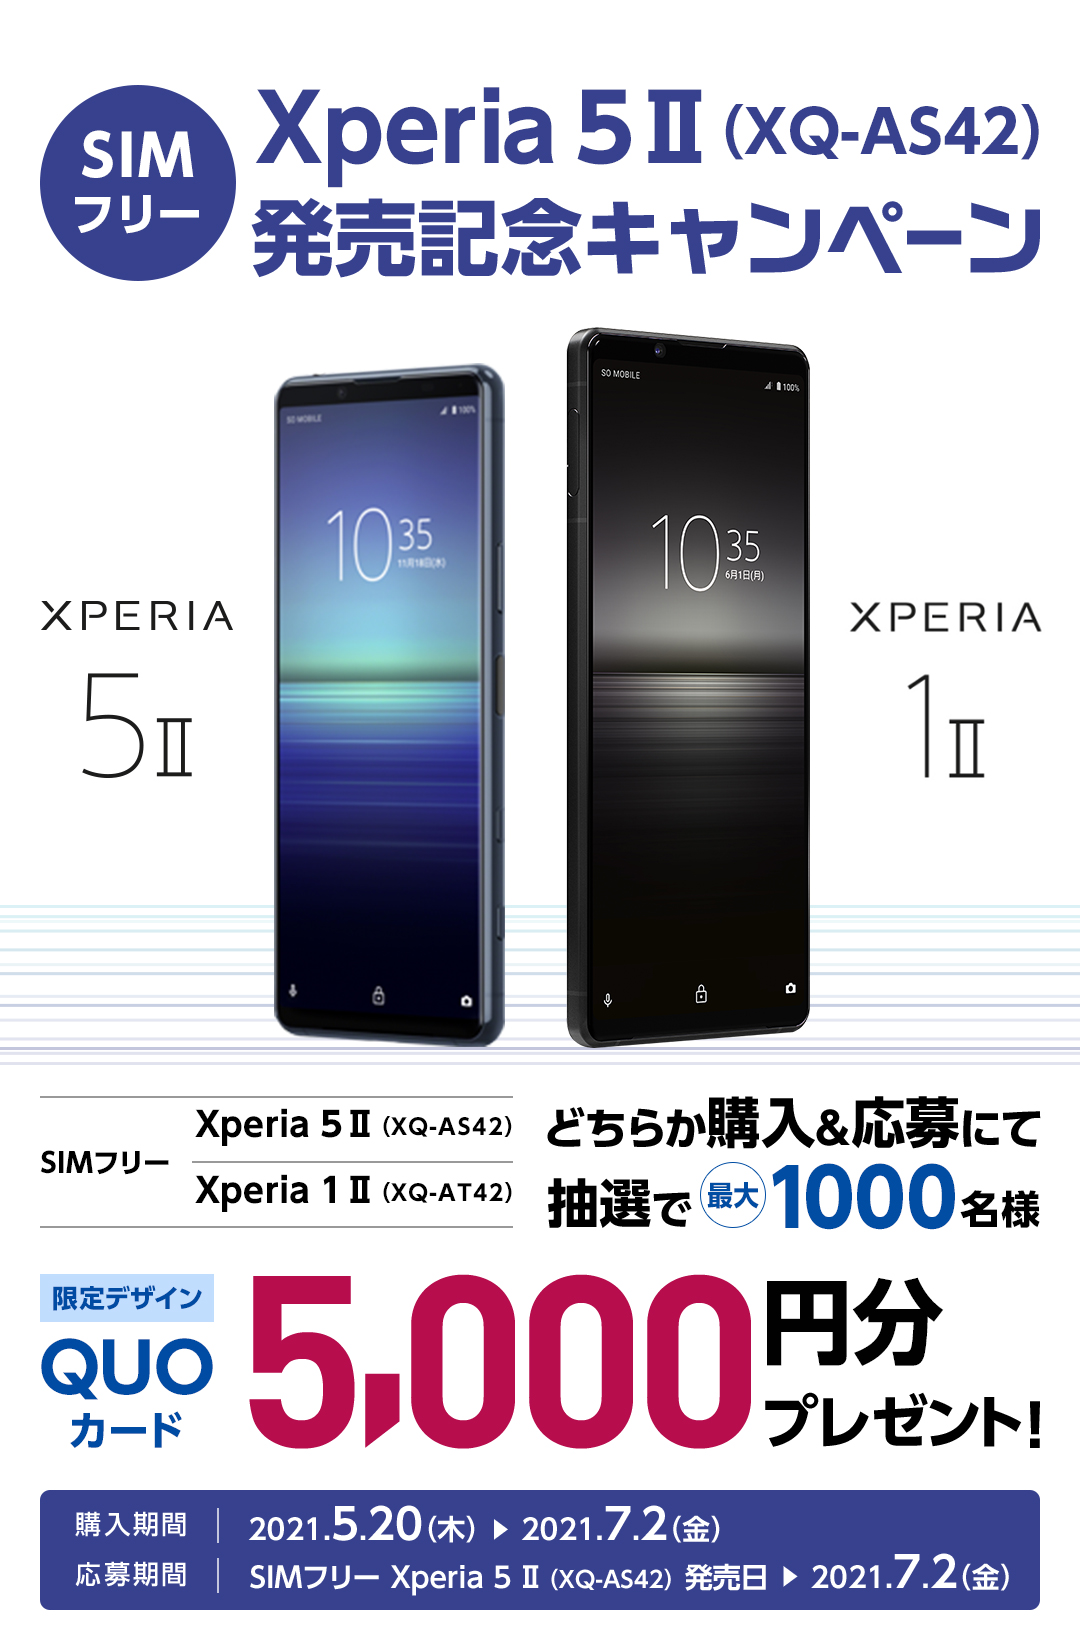 SIMフリー Xperia 5 II 発売記念キャンペーン | Xperia (エクスペリア ...